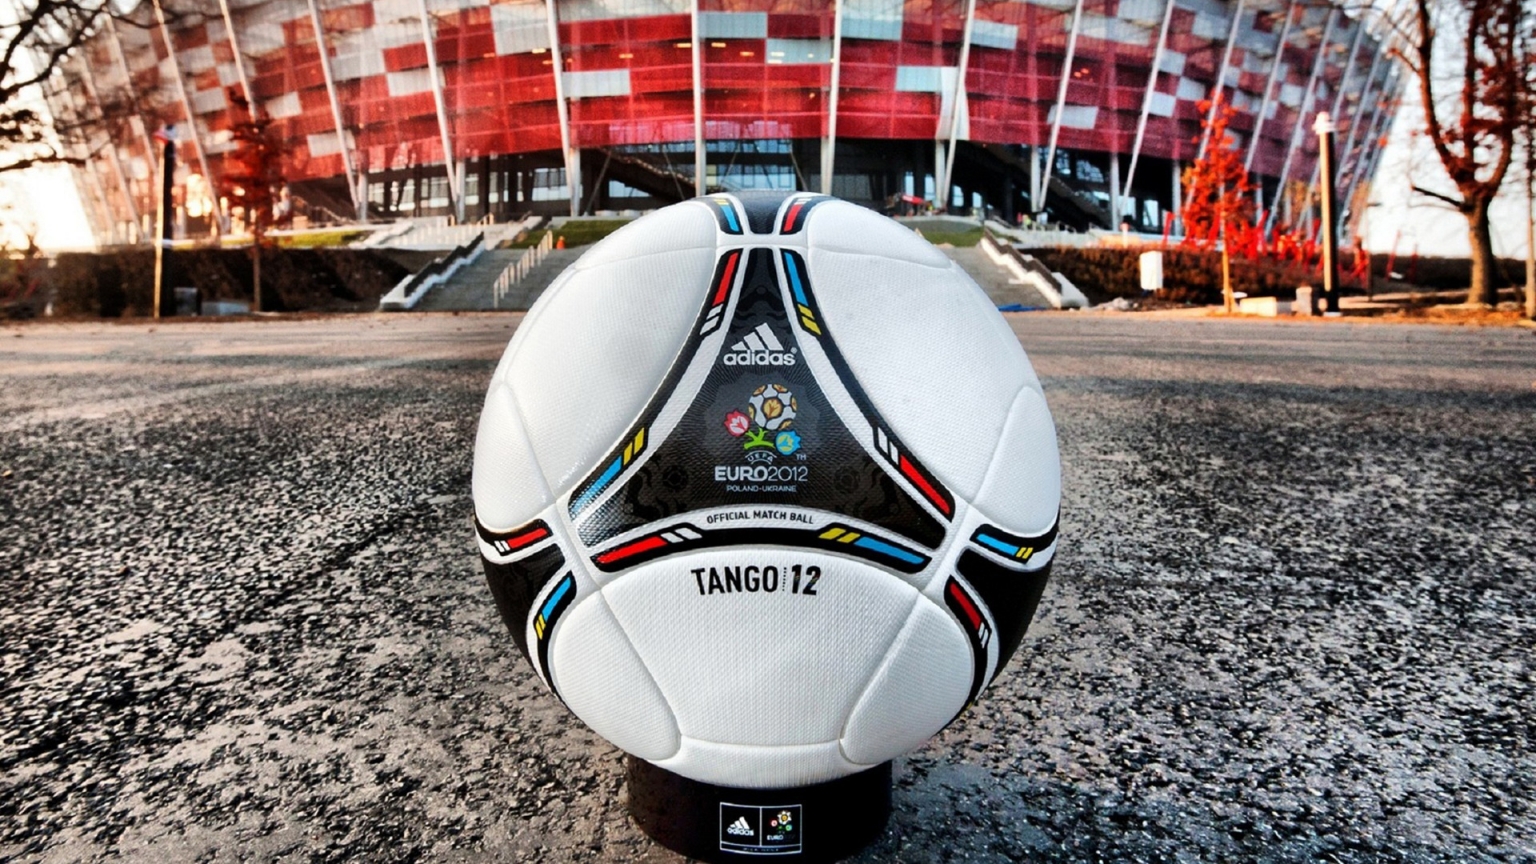 Tango EURO 2012 for 1536 x 864 HDTV resolution